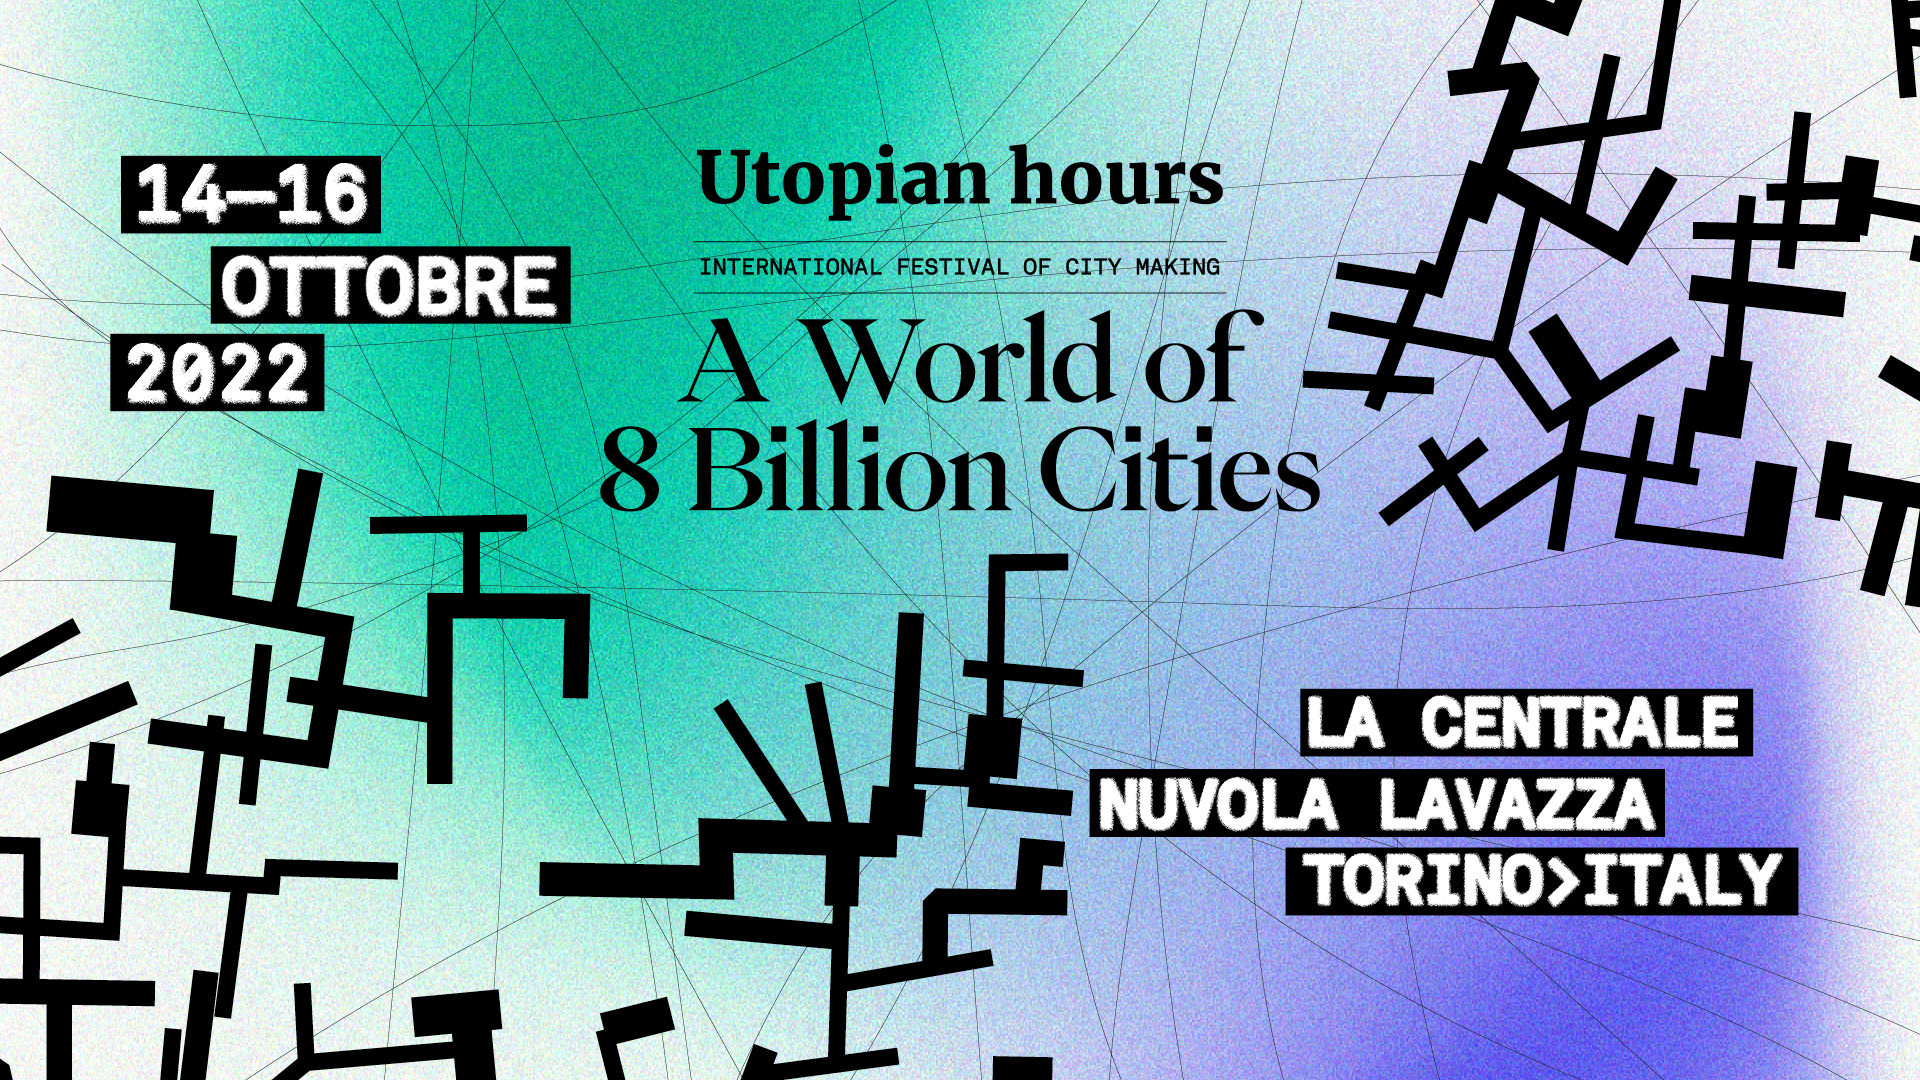 Opening: A World of 8 Billion Cities